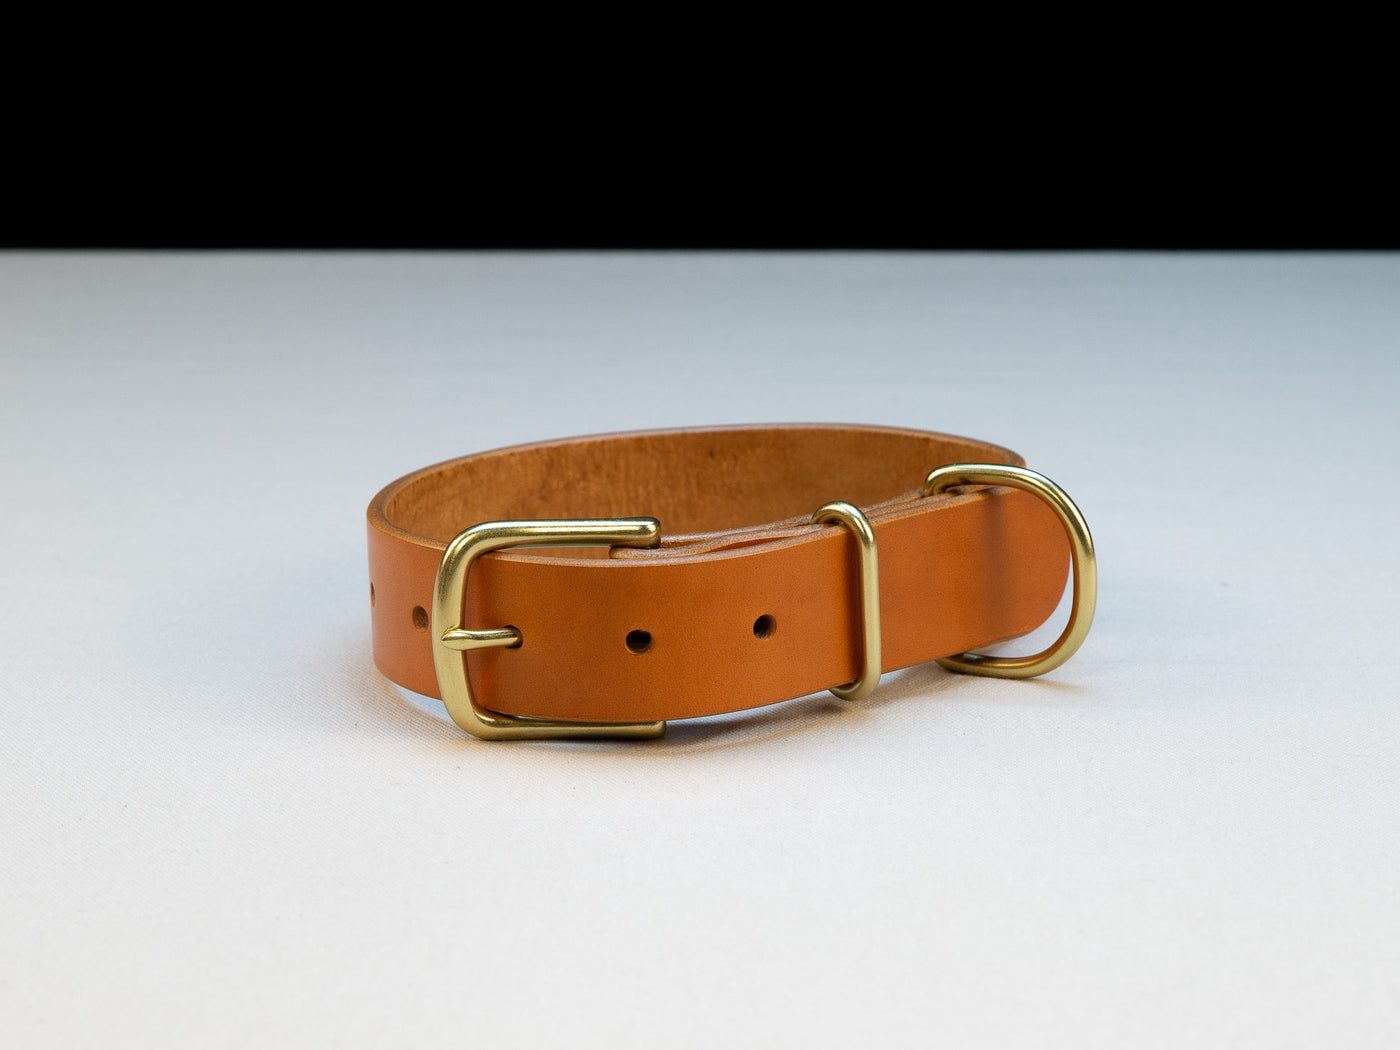 Leather Belt Dog Collar - Tan Brown English Bridle Leather - Atlas Leathercraft - Handmade Australian Leather Goods